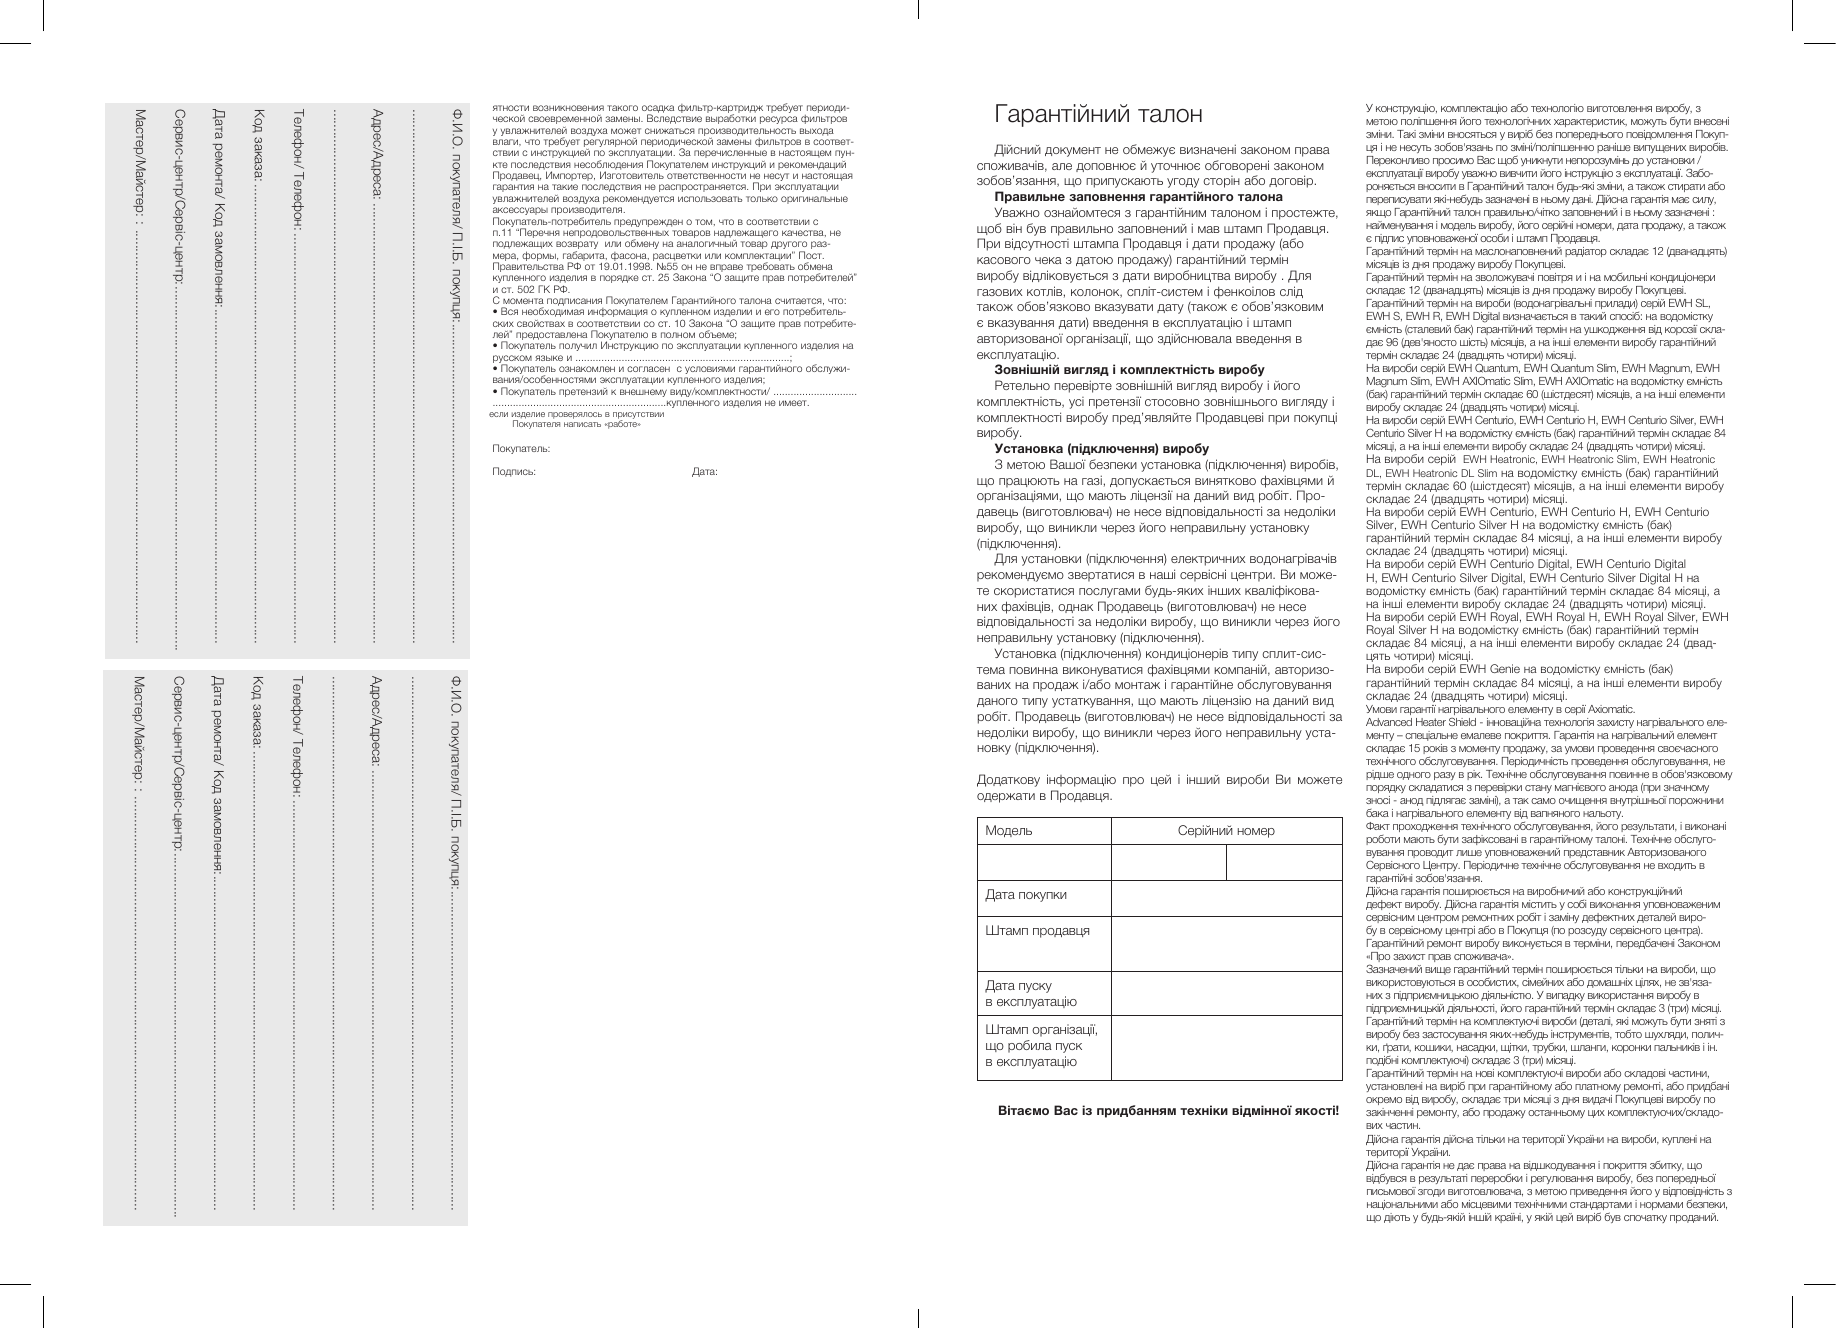 Page 8 of 11 - EWH AXIOmatic_manual  Manual EWH-AXIOmatic